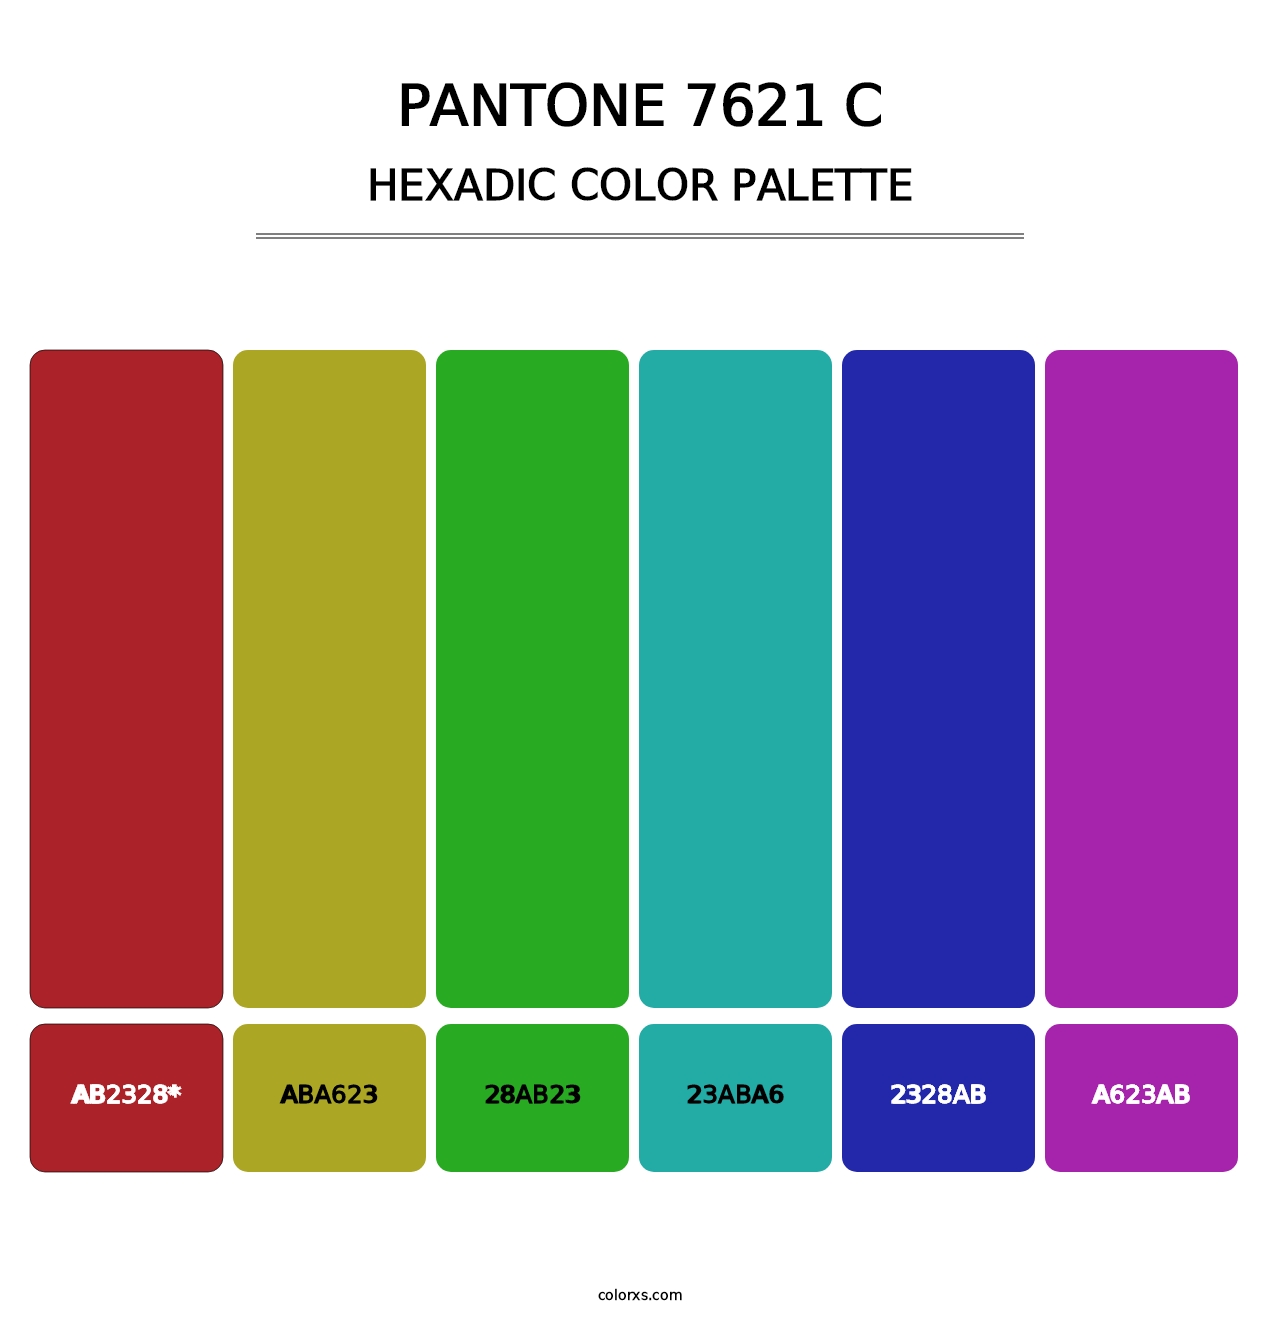 PANTONE 7621 C - Hexadic Color Palette